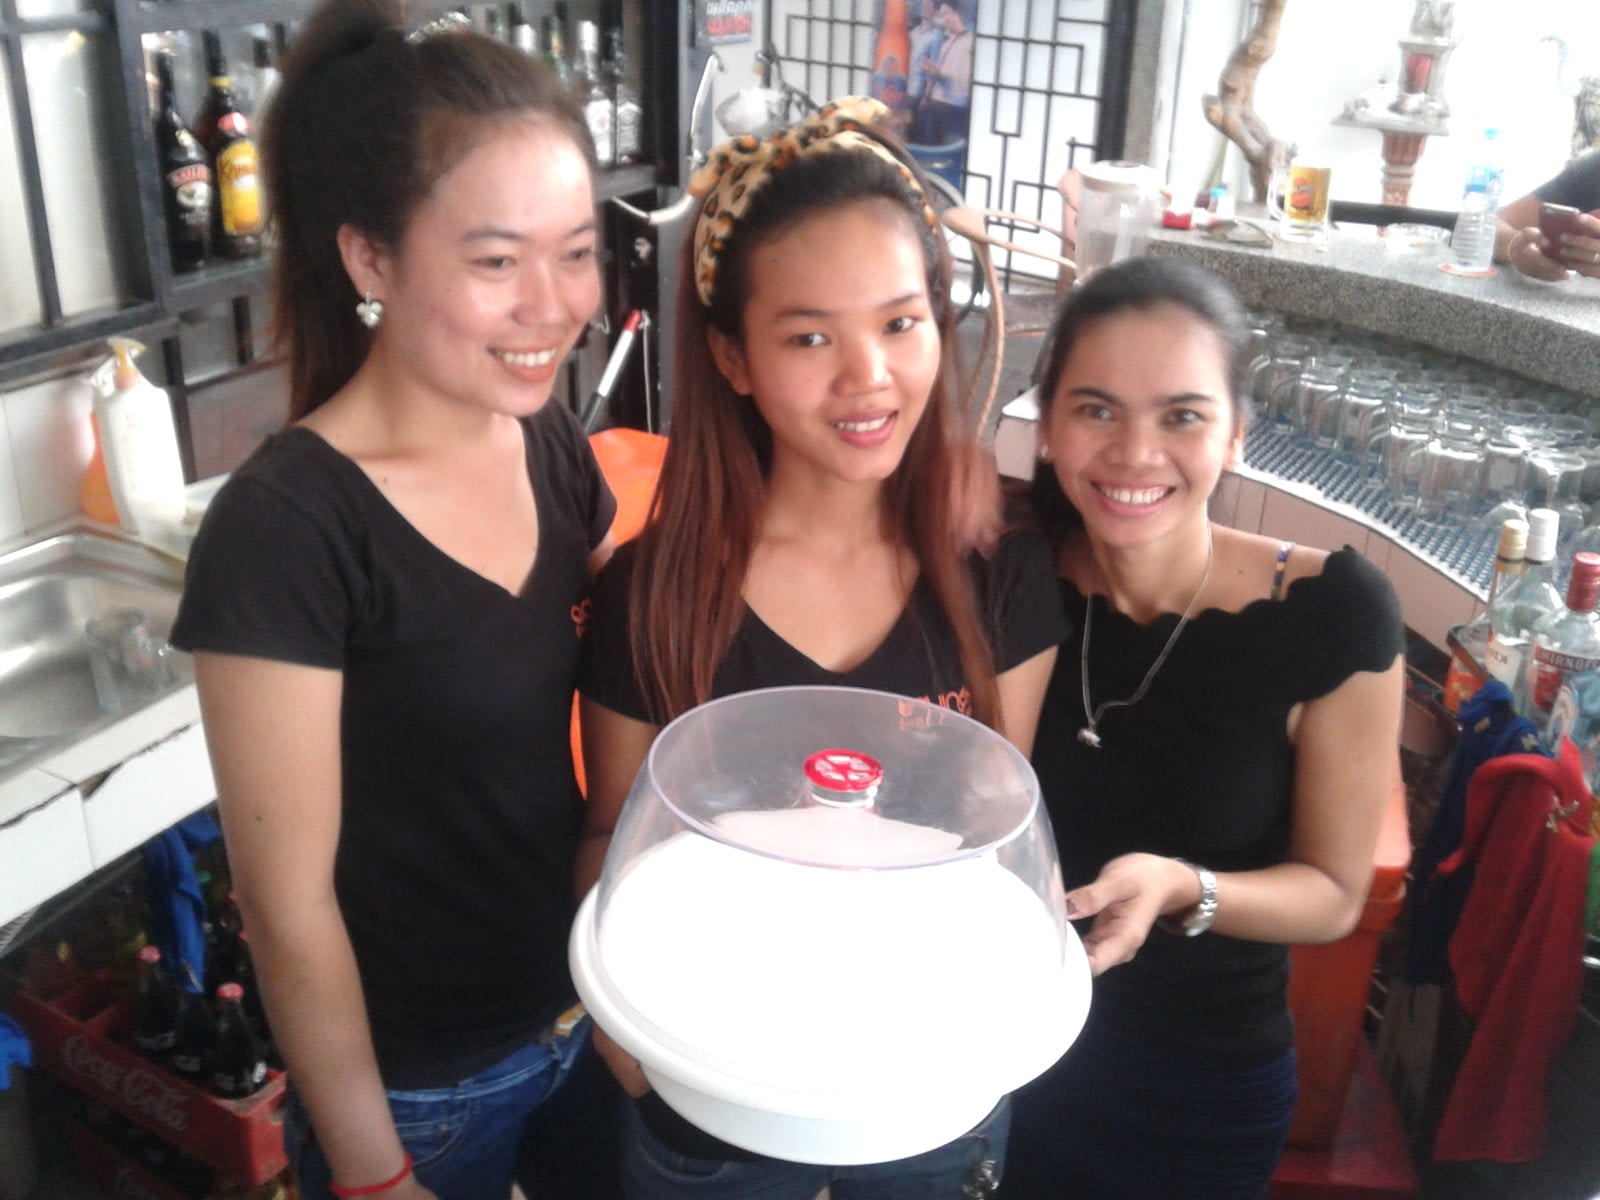 3 women, Equinox staff, hold an empty display dish.